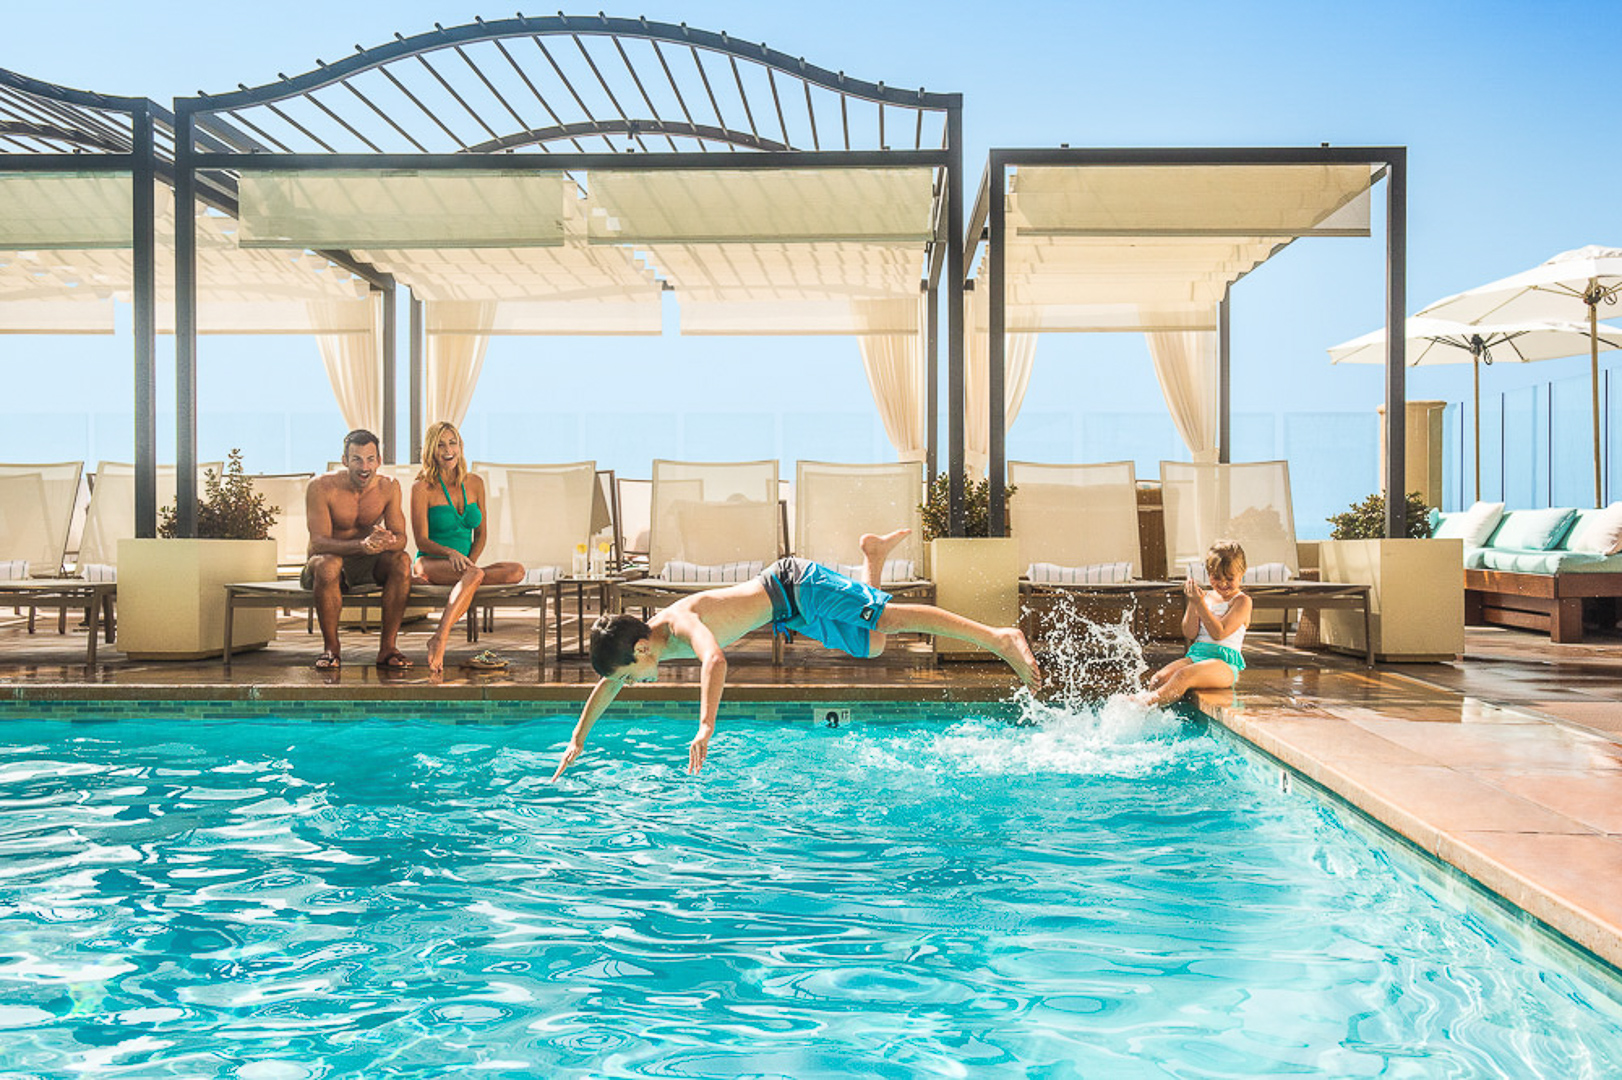 Surf & Sand - JC Resorts February 2015 - © Kevin Steele